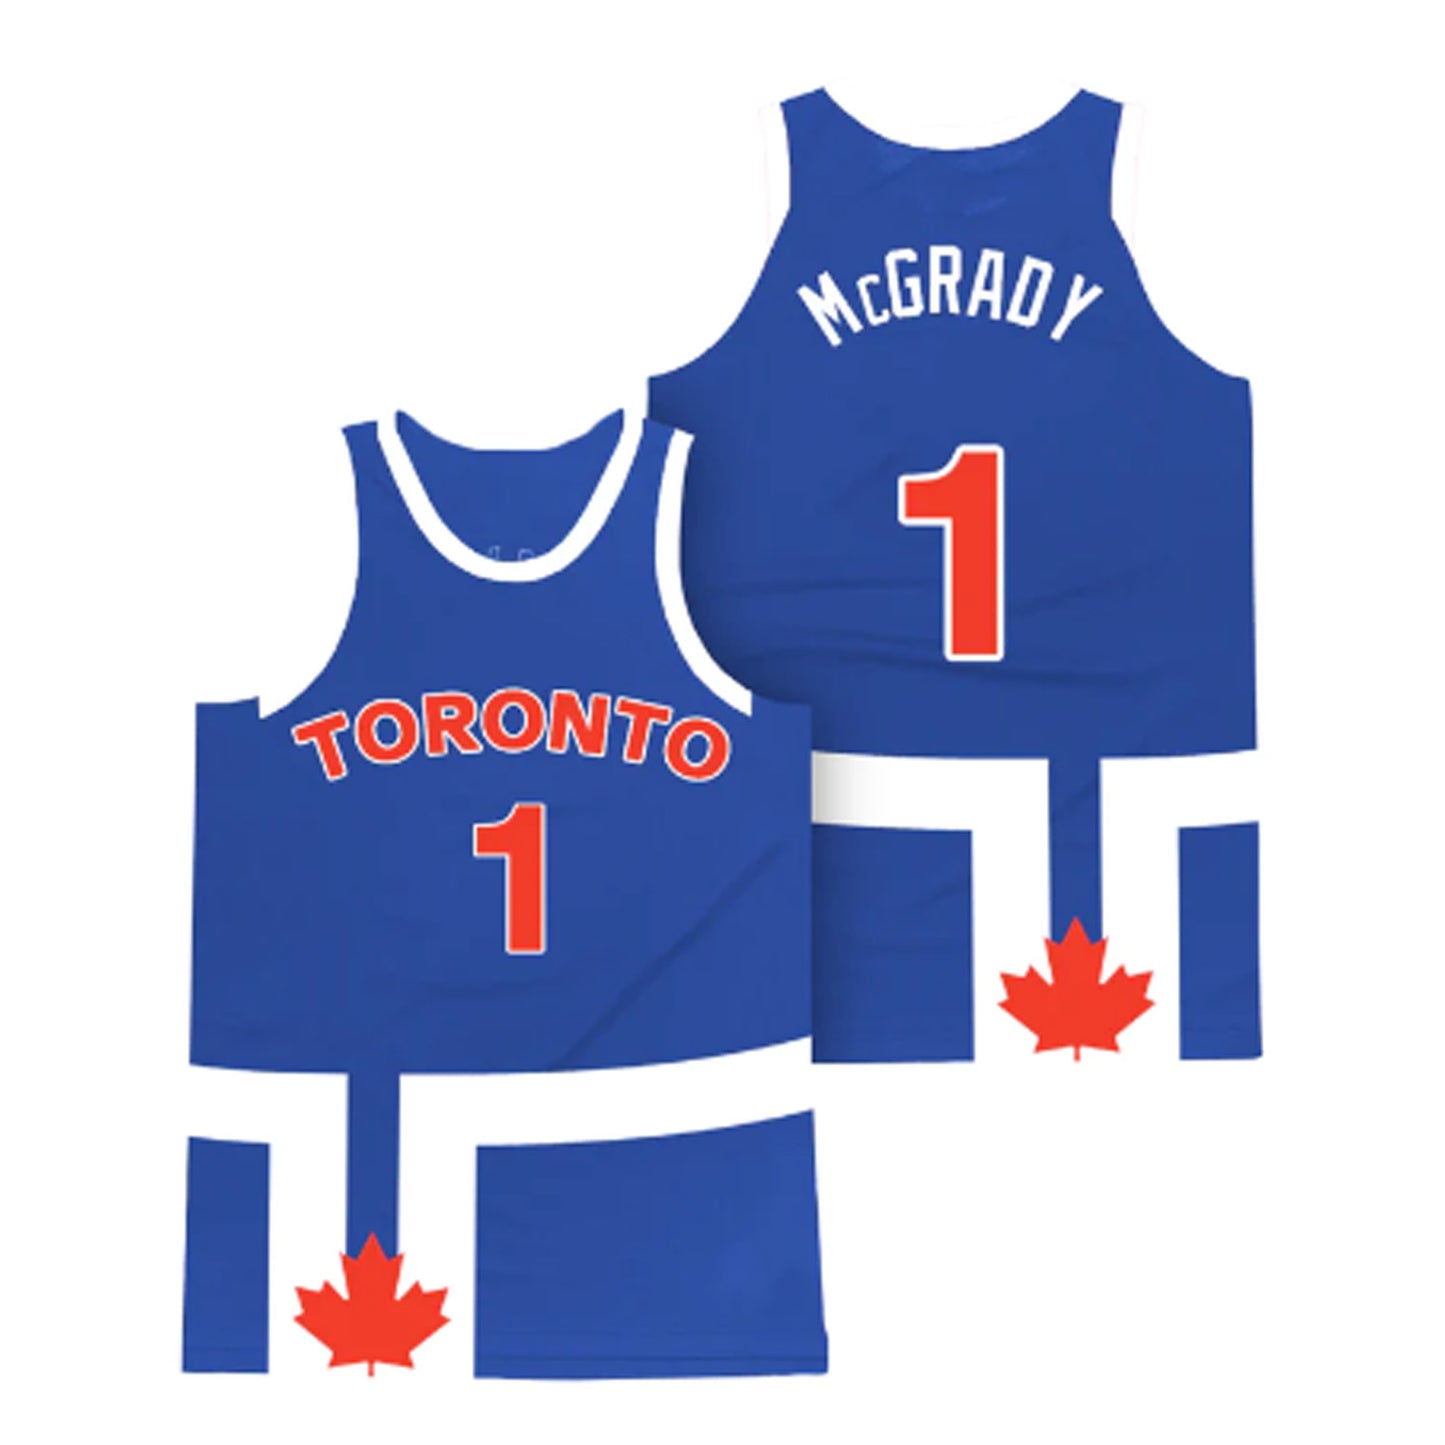 Tracy McGrady Toronto 1 Jersey